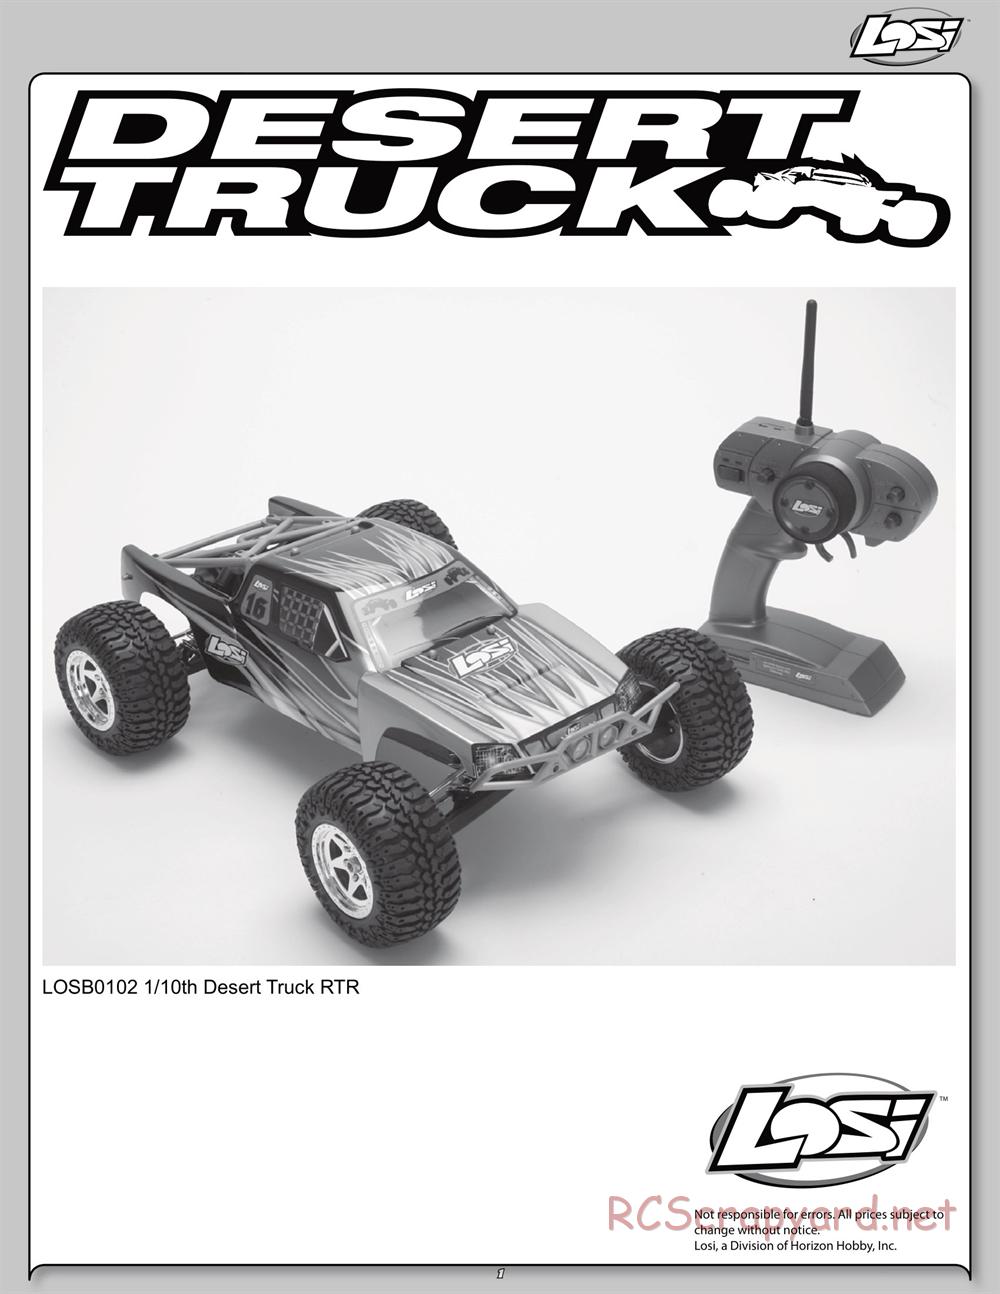 Team Losi - Desert Truck - Manual - Page 1